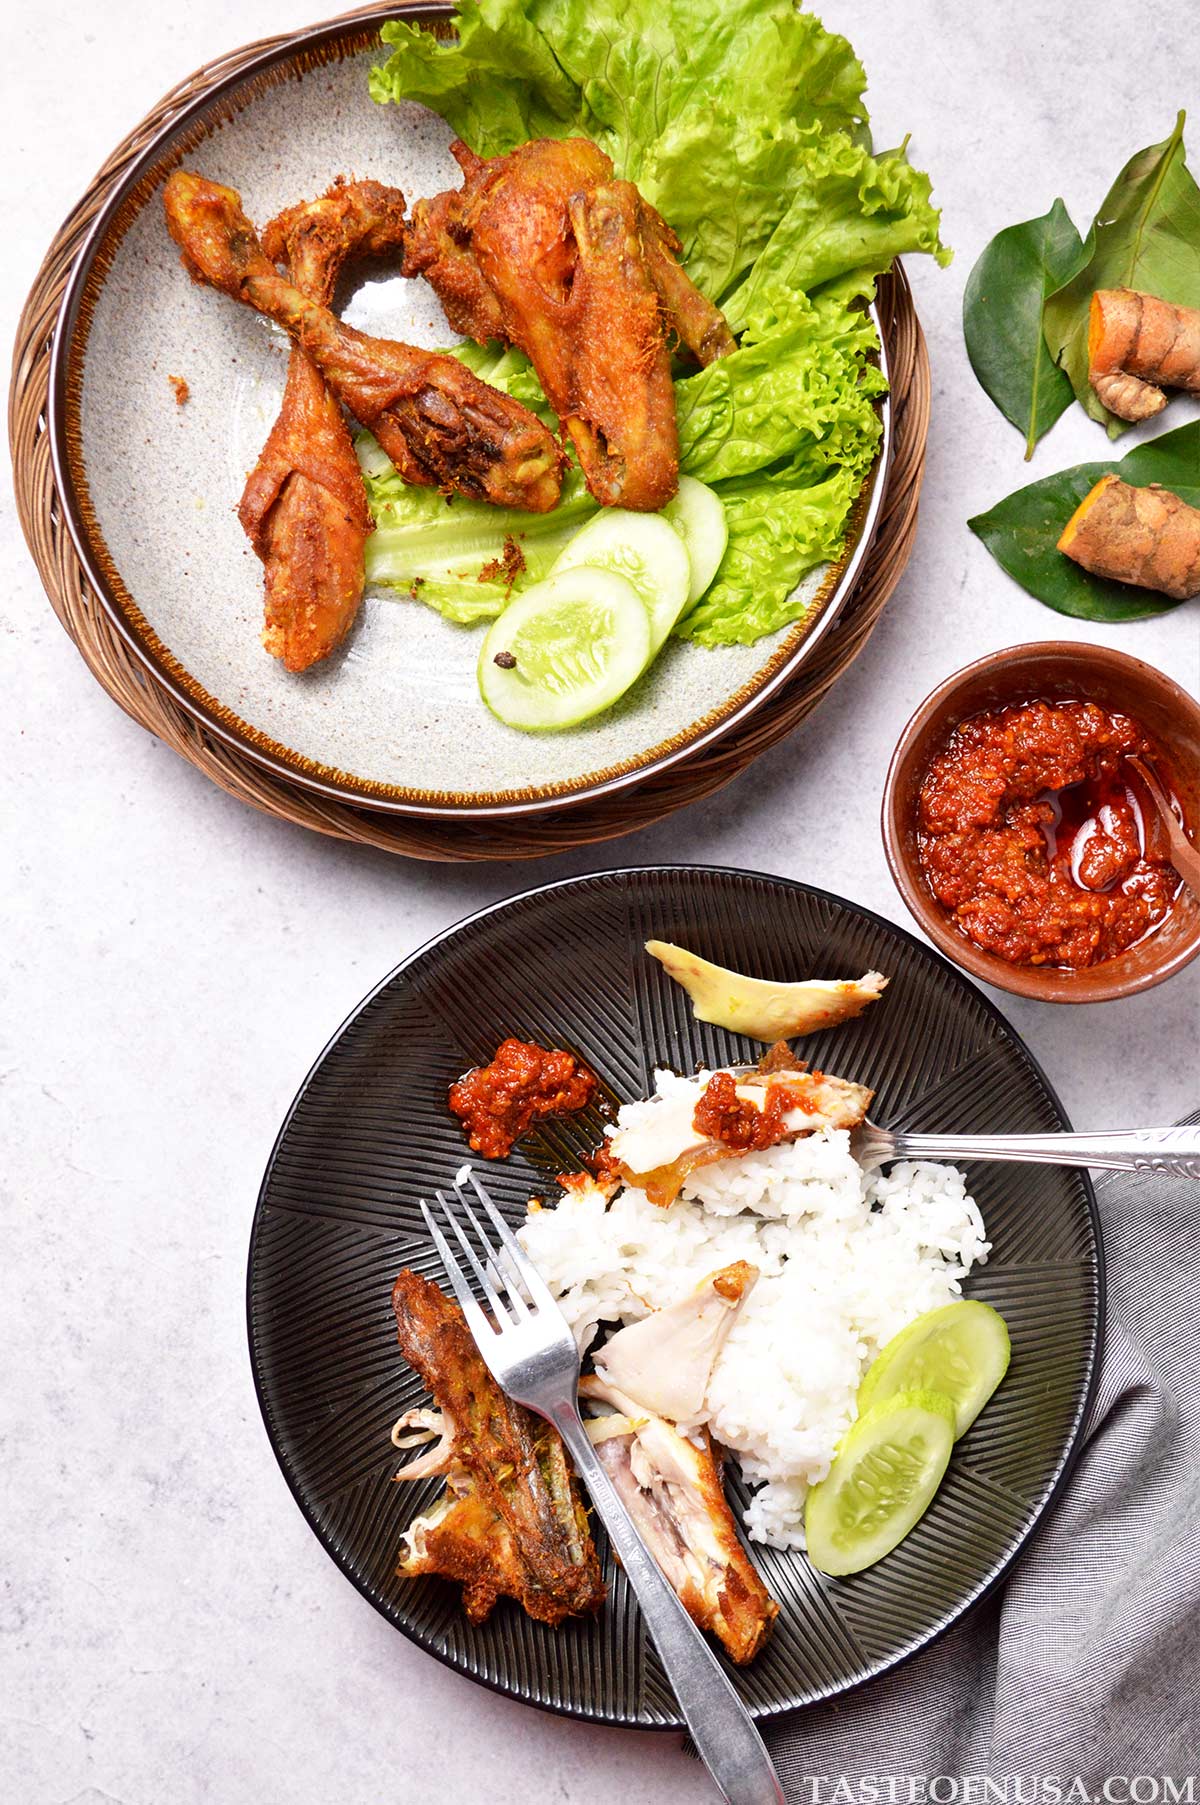 ayam goreng ungkep (indonesian fried chicken) with rice and sambal terasi